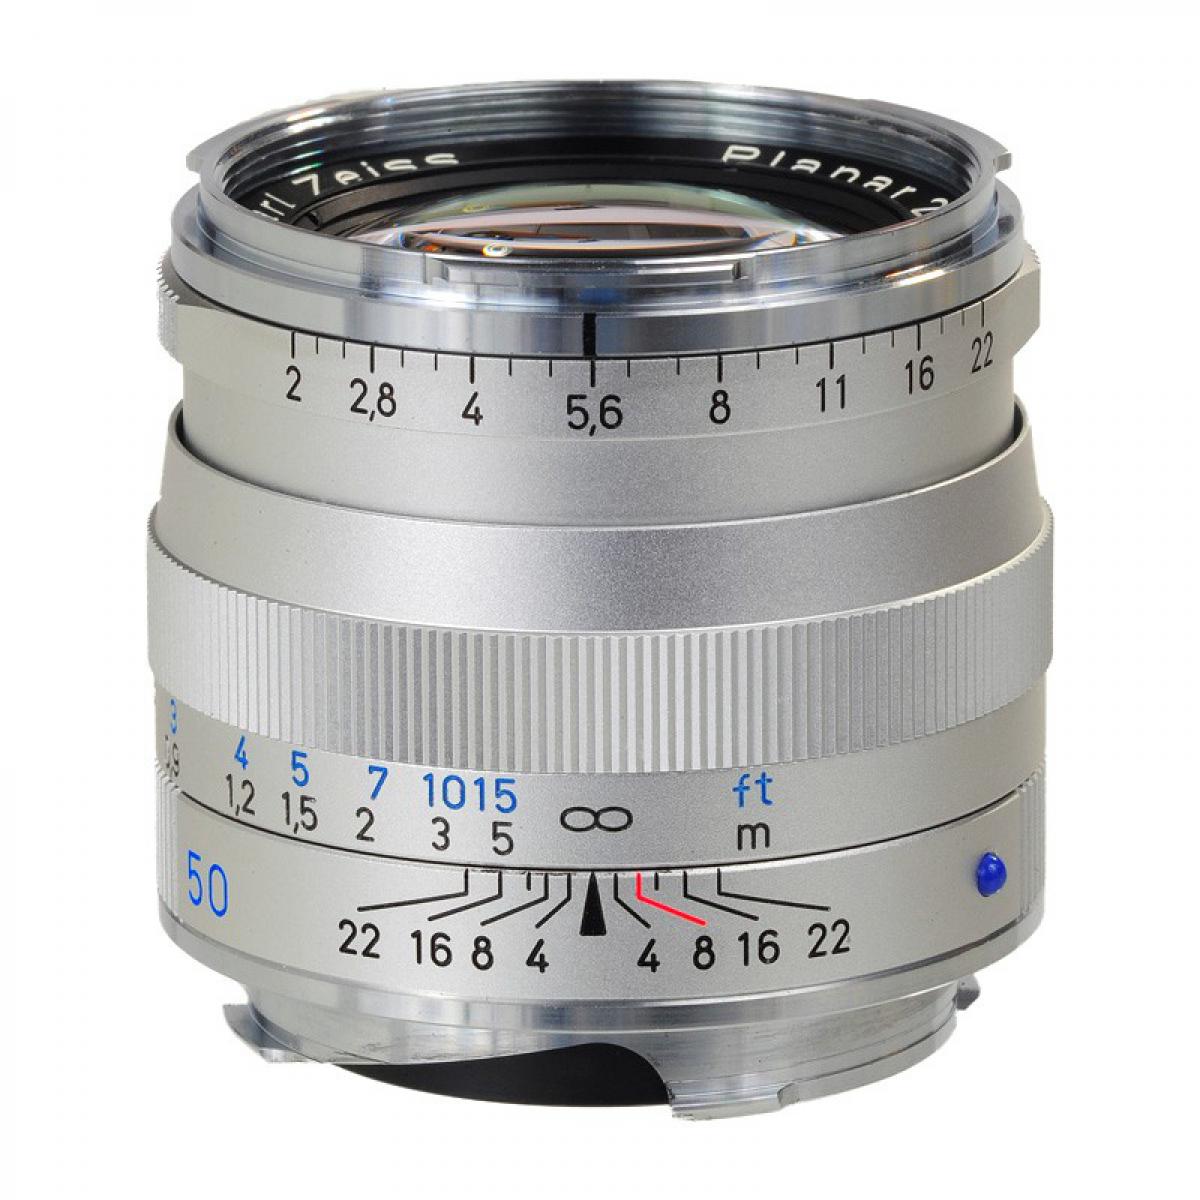 Carl Zeiss - ZEISS Objectif Plannar T* 50mm f/2 ZM Argent compatible avec Leica - Objectif Photo